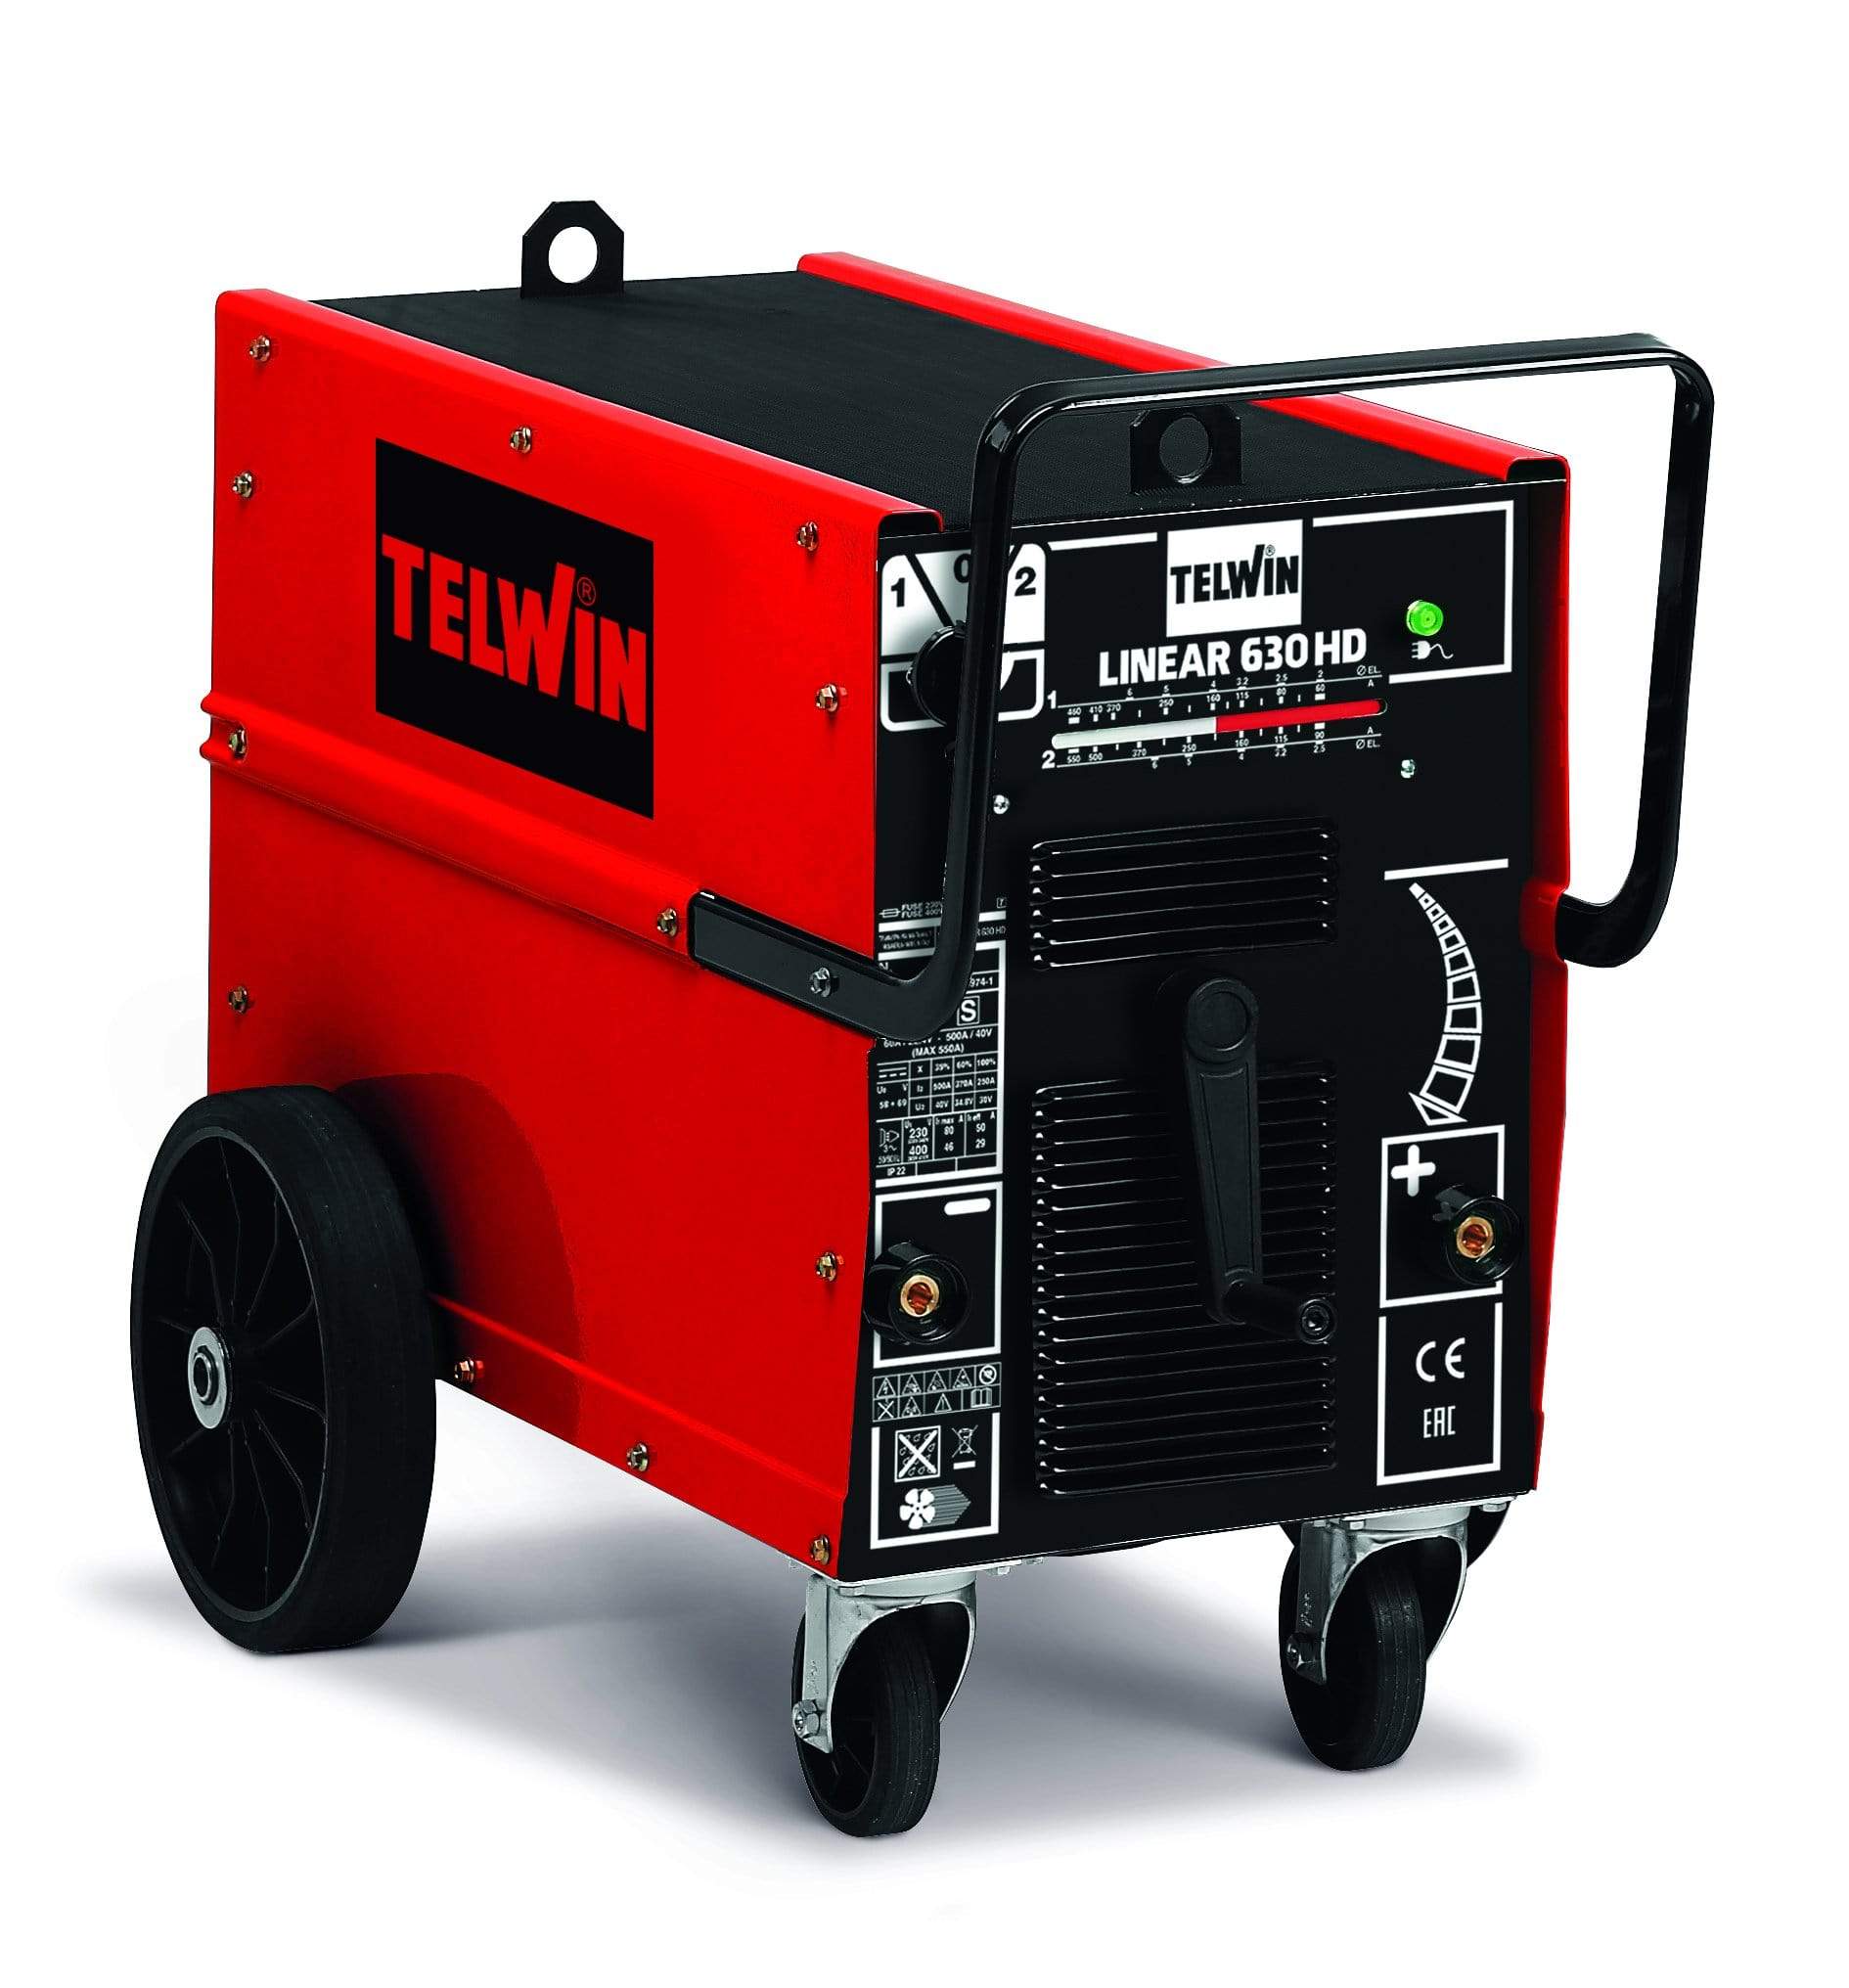 Telwin MMA Welding Machine 230V/400V - LINEAR 430HD | Supply Master | Accra, Ghana Tools Building Steel Engineering Hardware tool